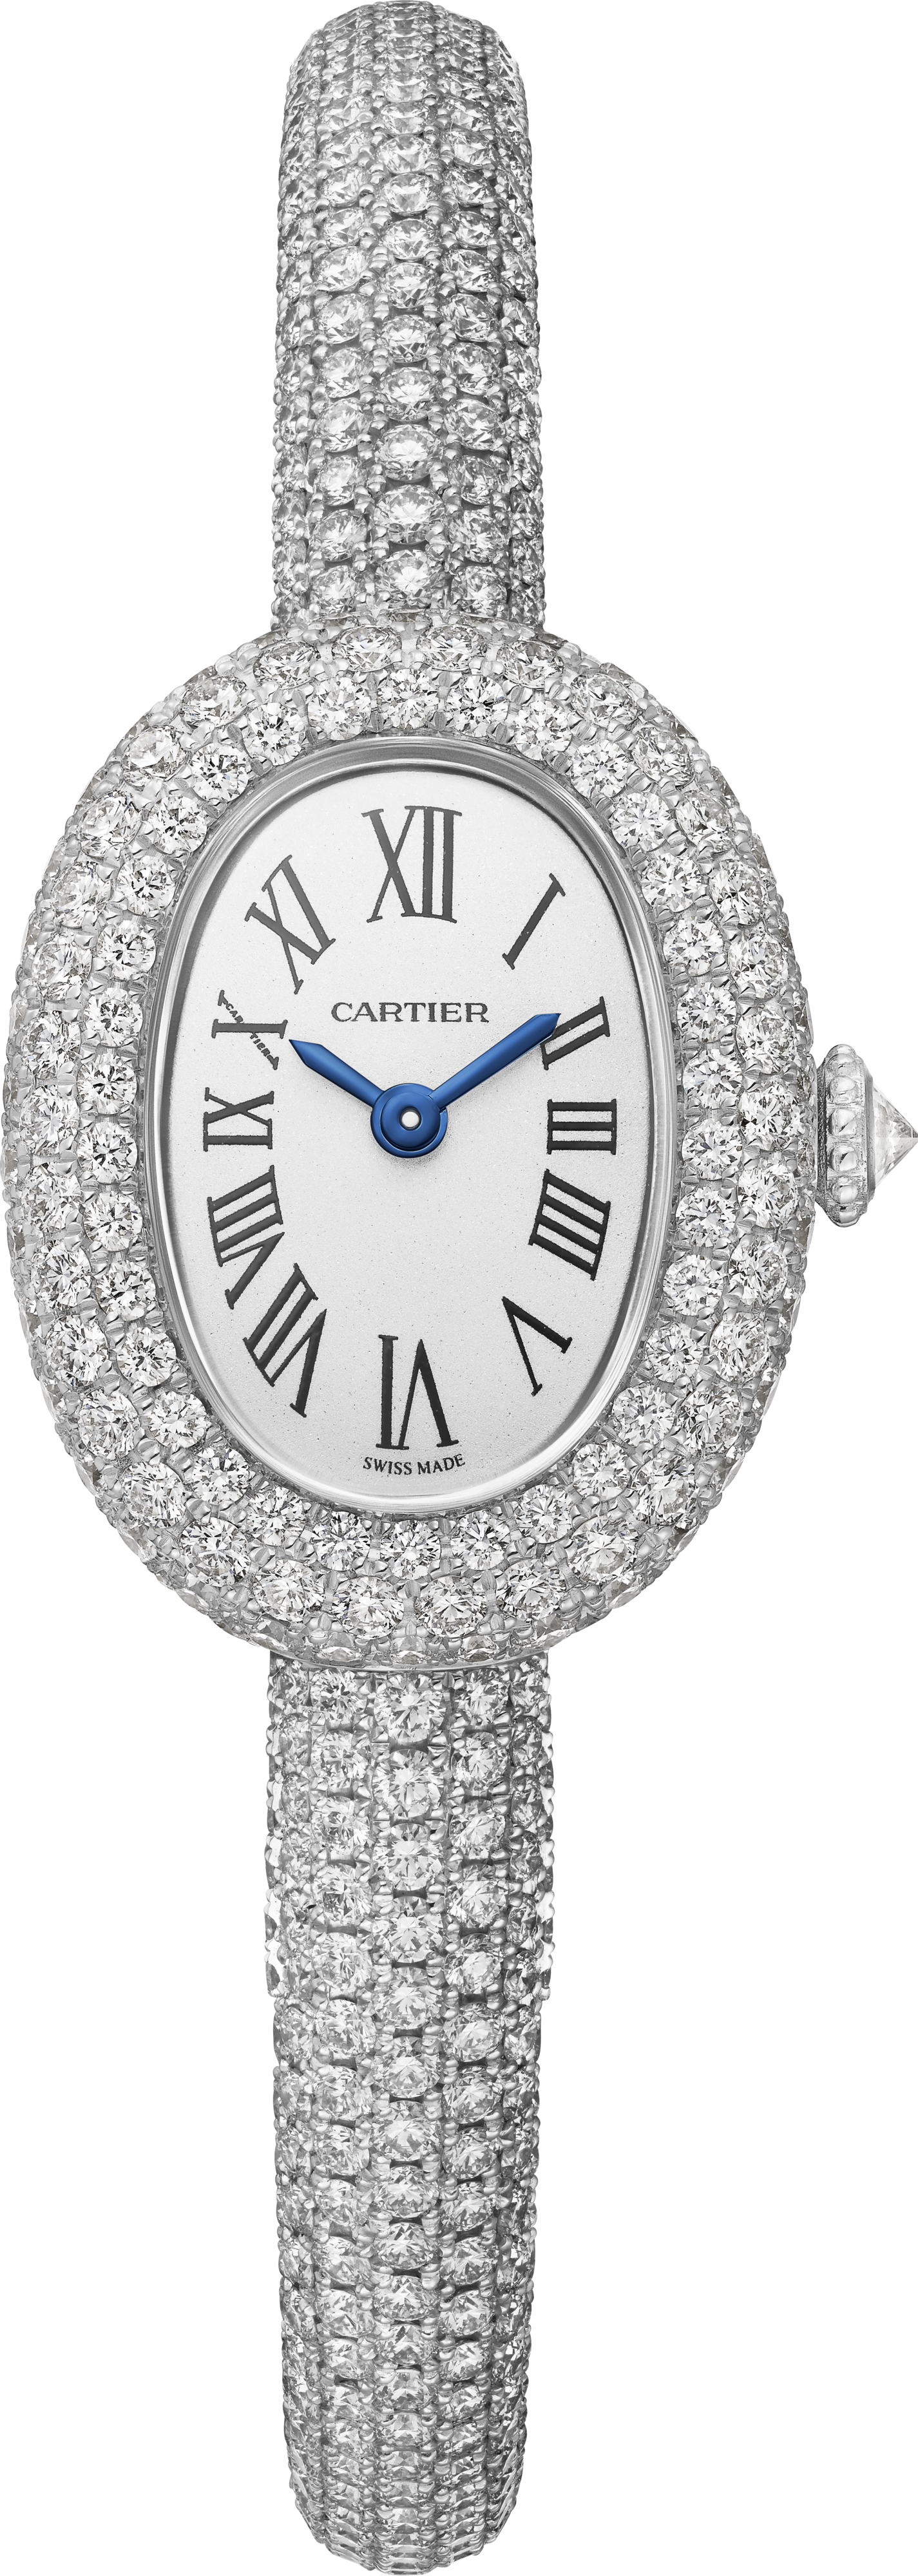 Baignoire watch (Size 16)Mini model, quartz movement, white gold, diamonds